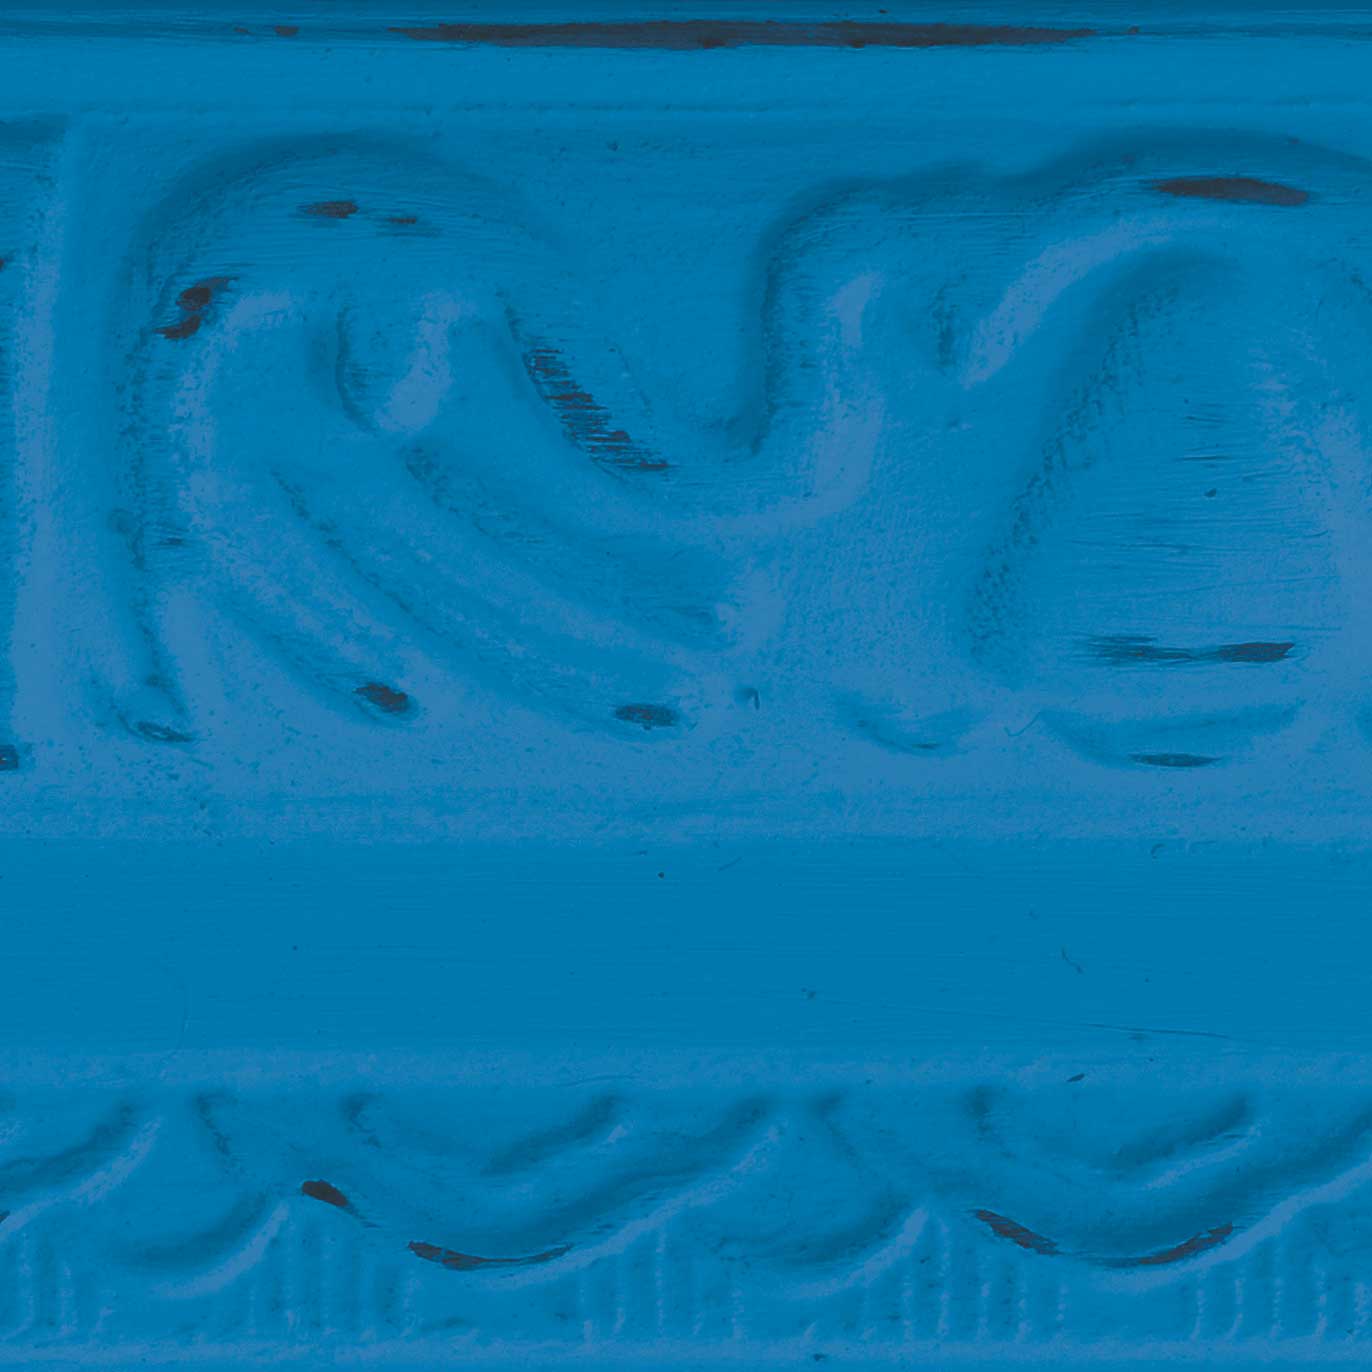 FolkArt Home Decor Chalk - Provincial Blue, 8 oz. - 34802